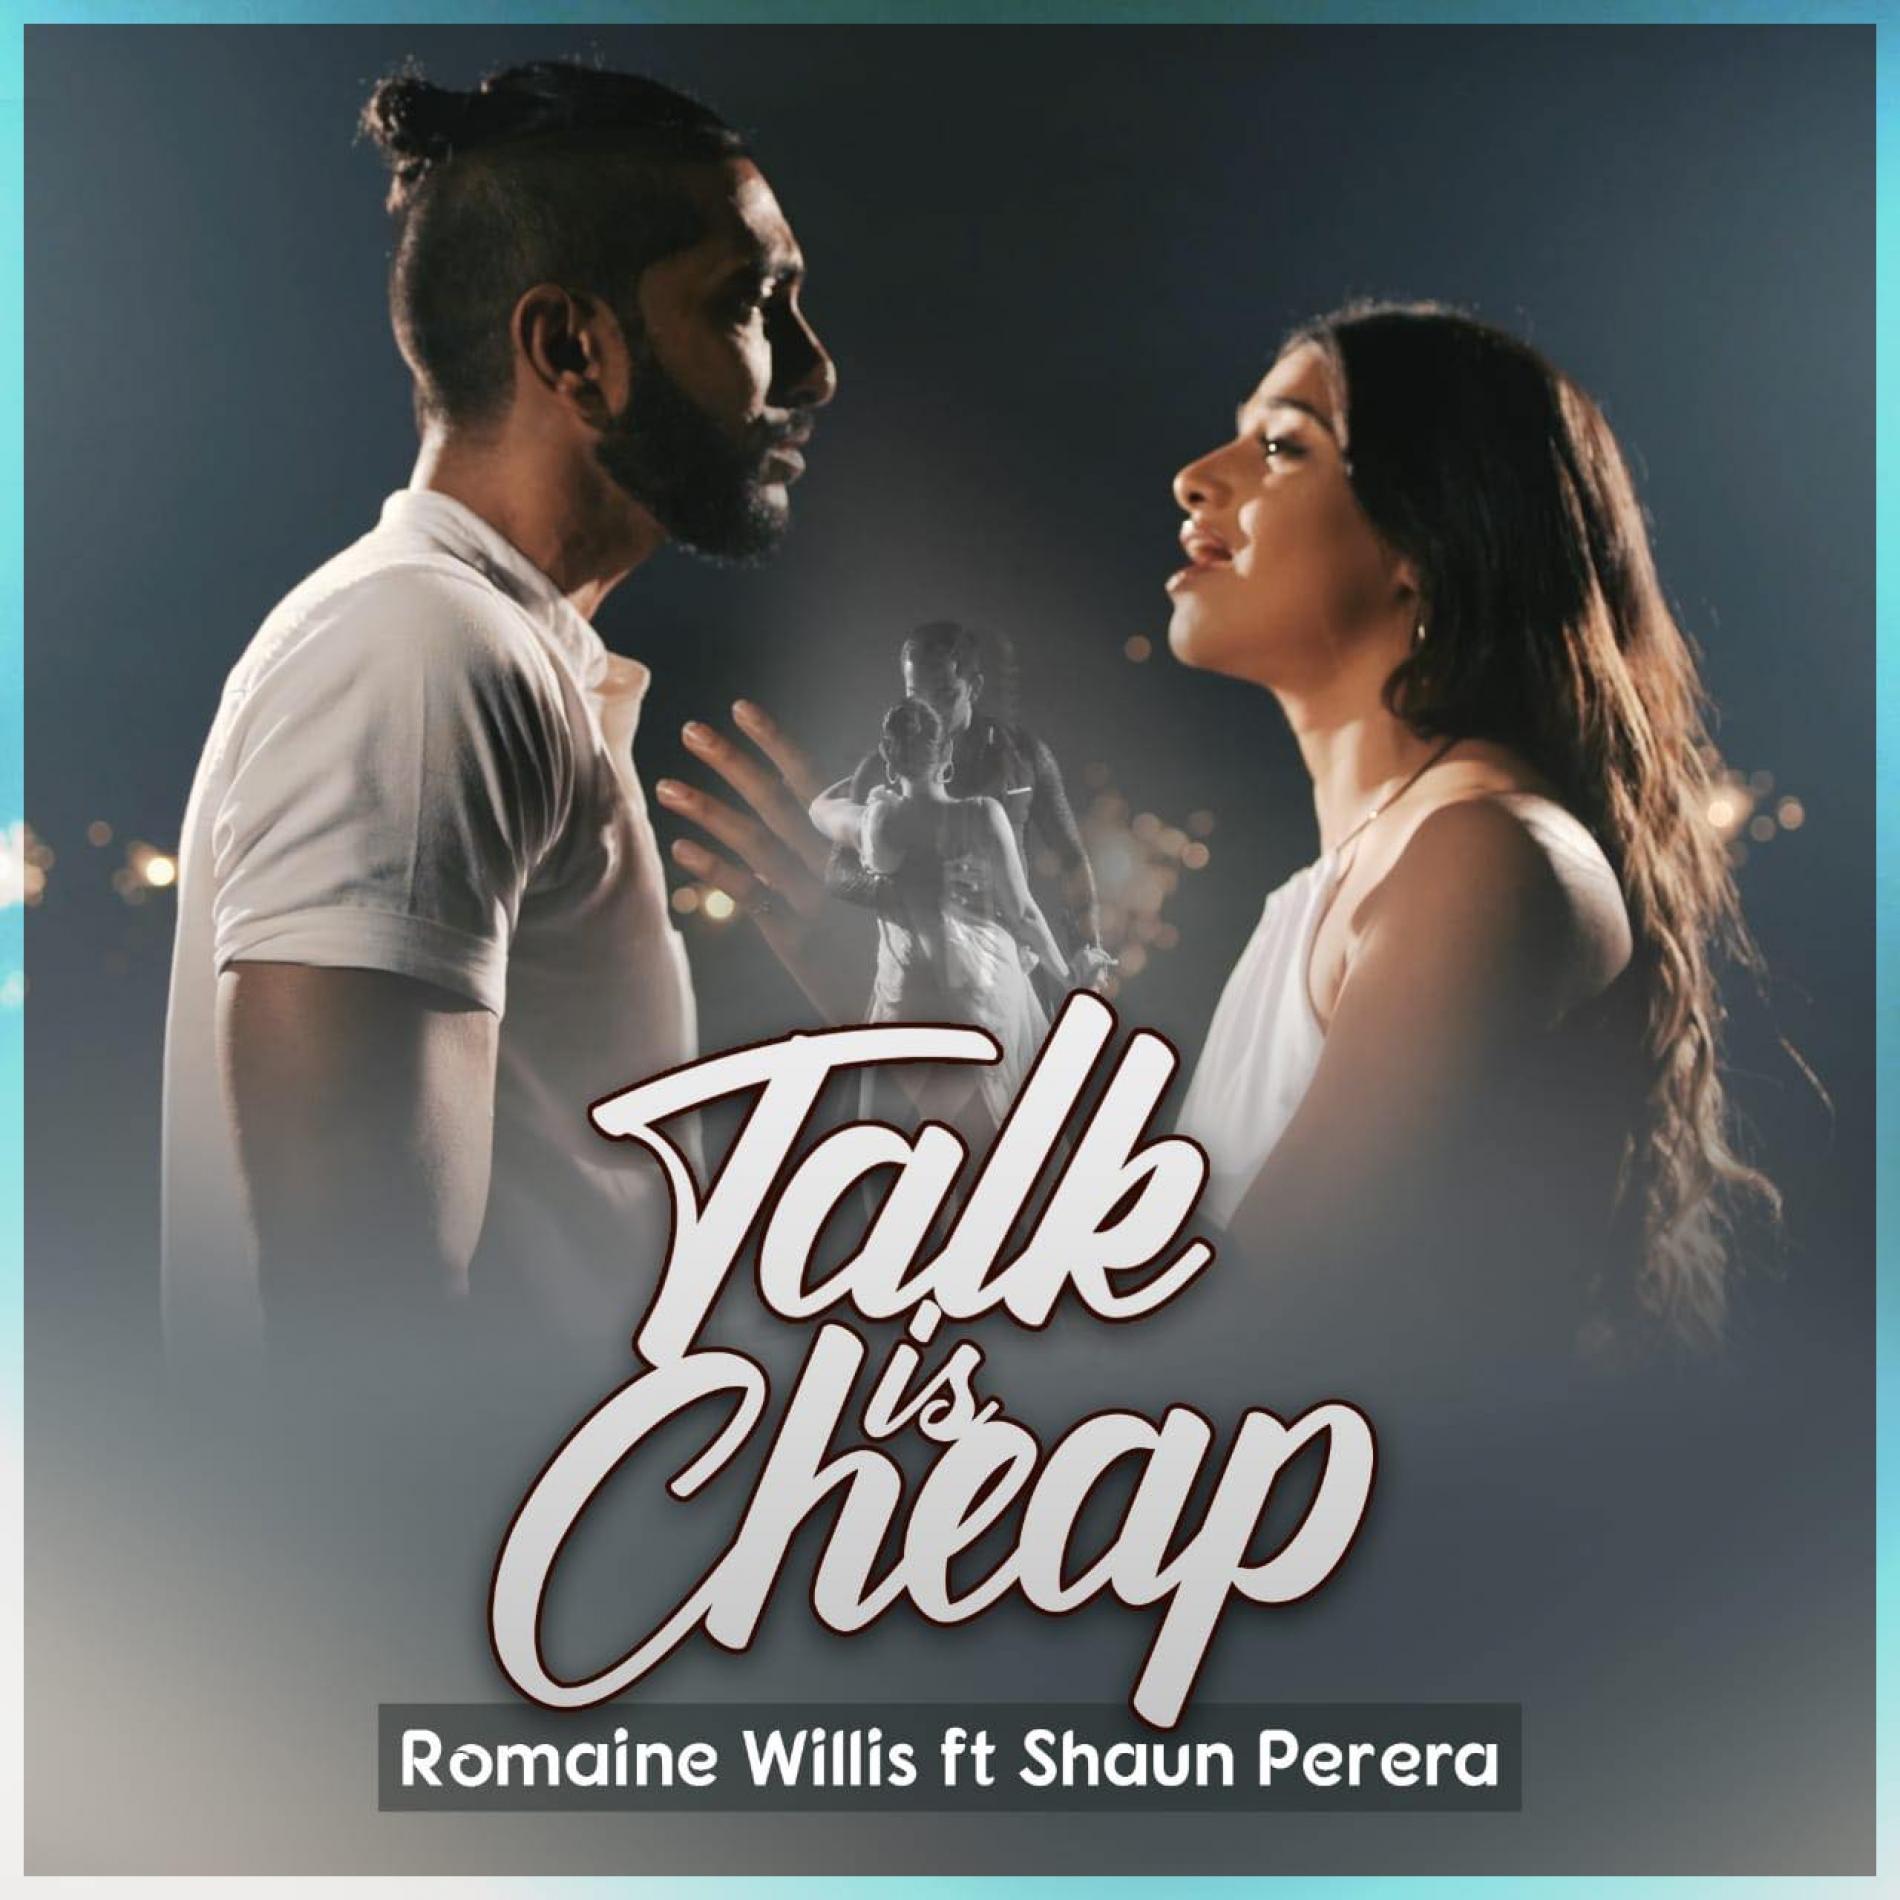 New Music : Talk Is Cheap (Good Groove Cover) – Romaine Willis ft Shaun Perera